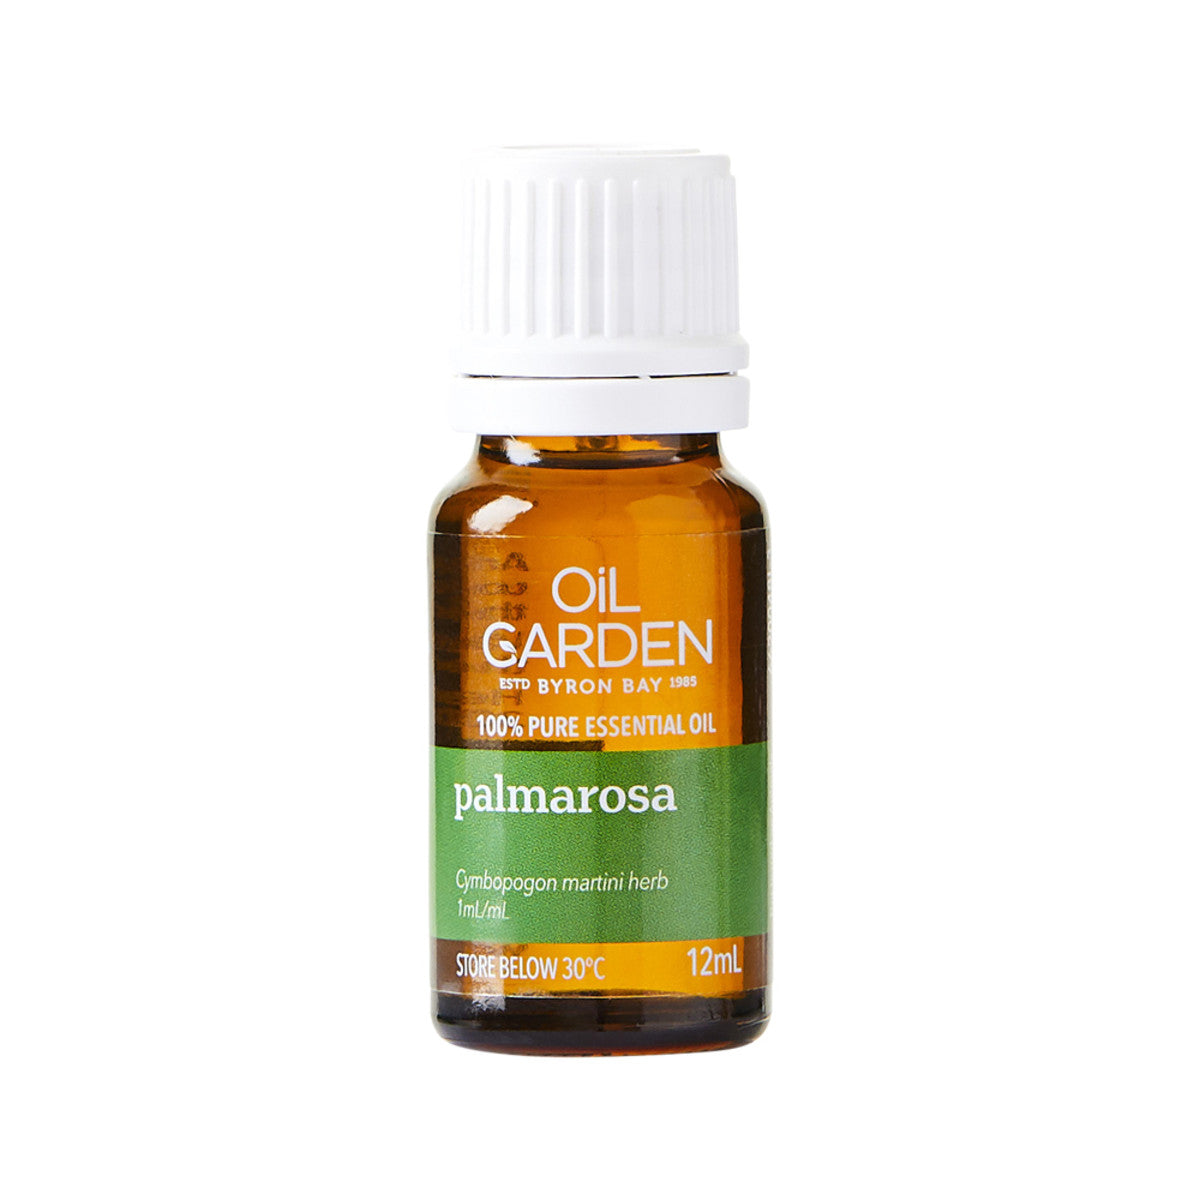 Oil Garden Essential Oil Palmarosa 12ml